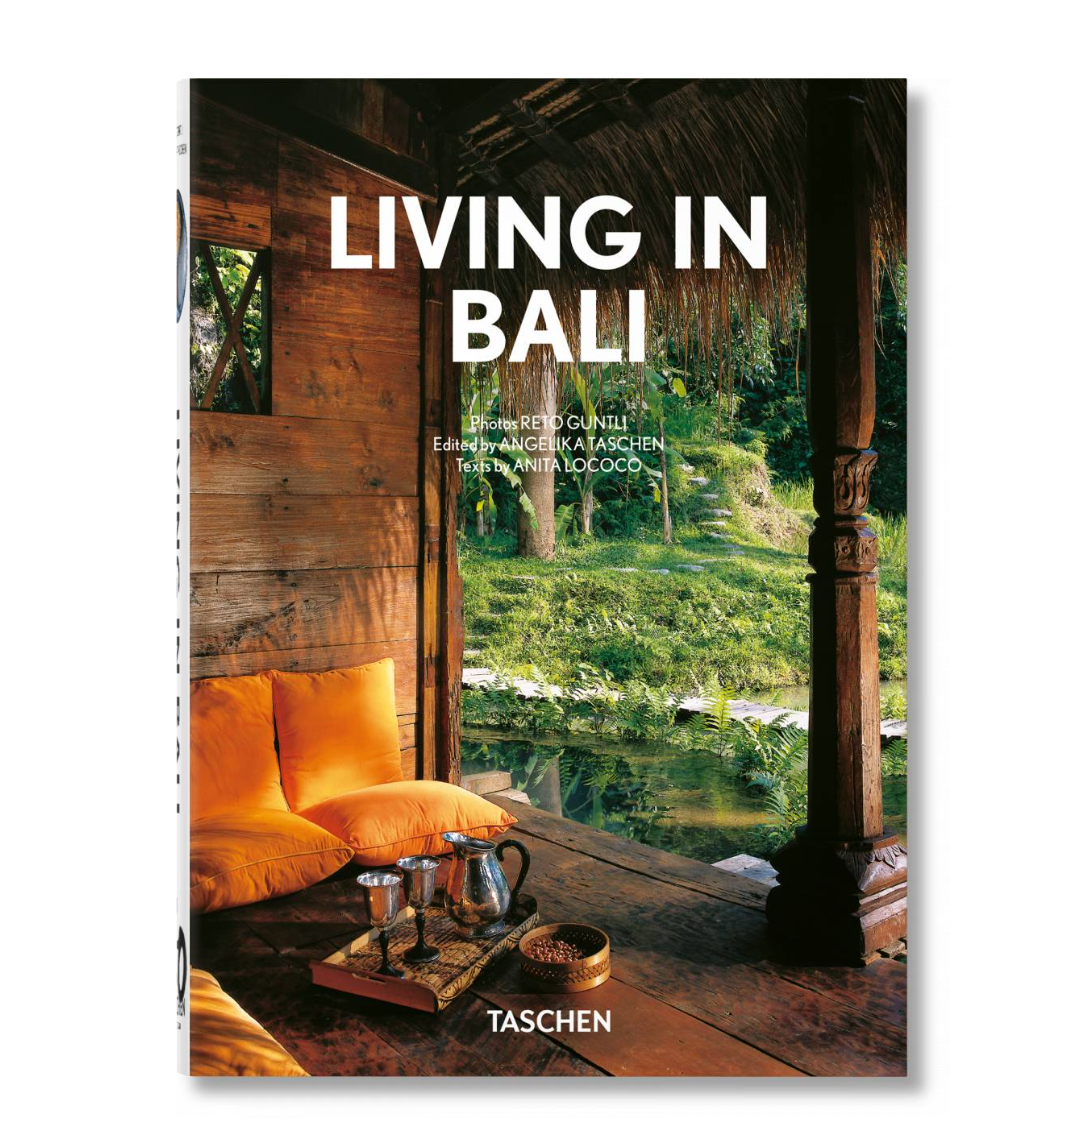 Taschen - Living in Bali. 40th Ed.